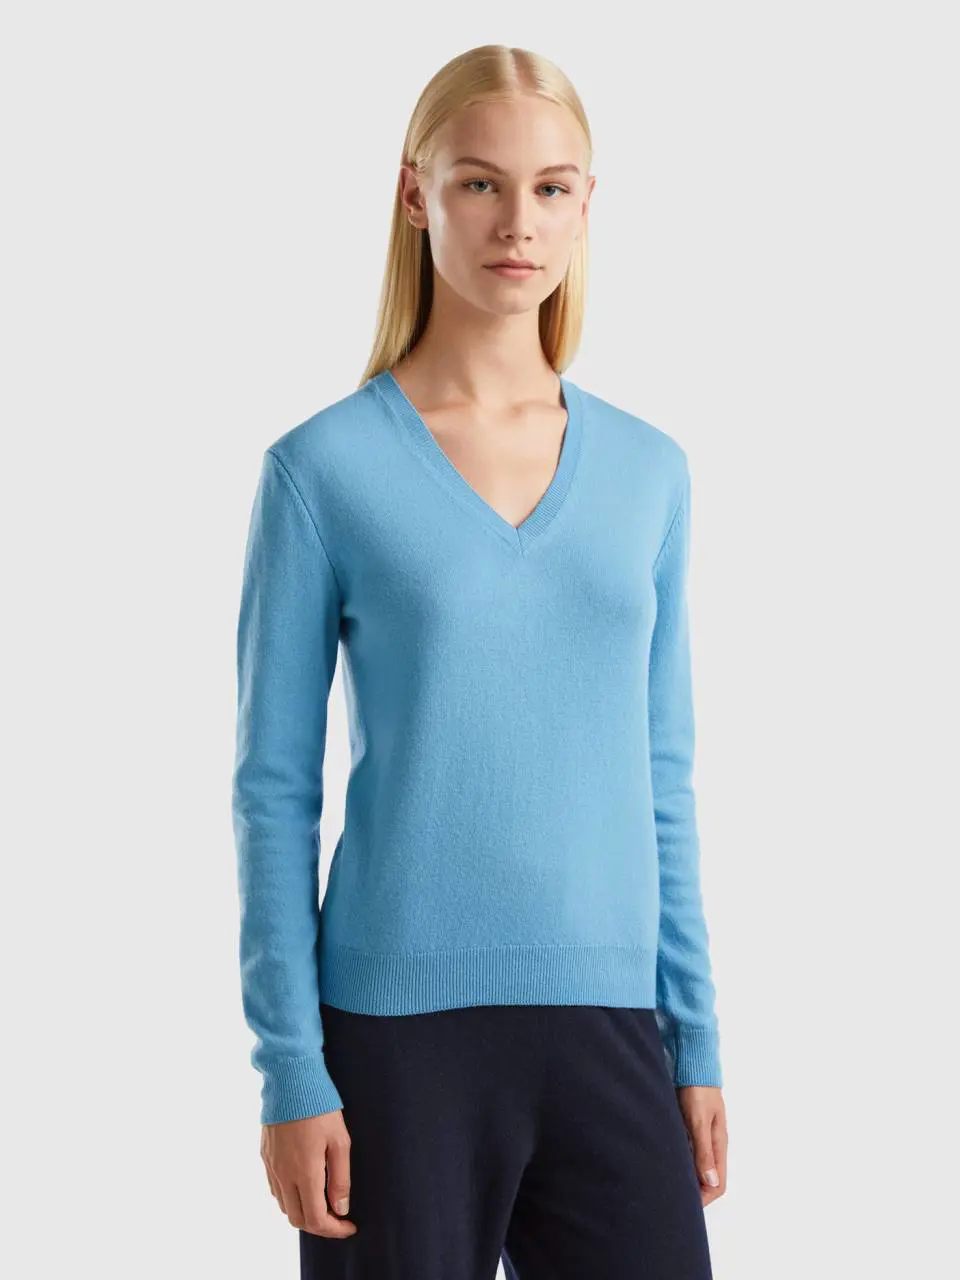 Benetton light blue v-neck sweater in pure merino wool. 1